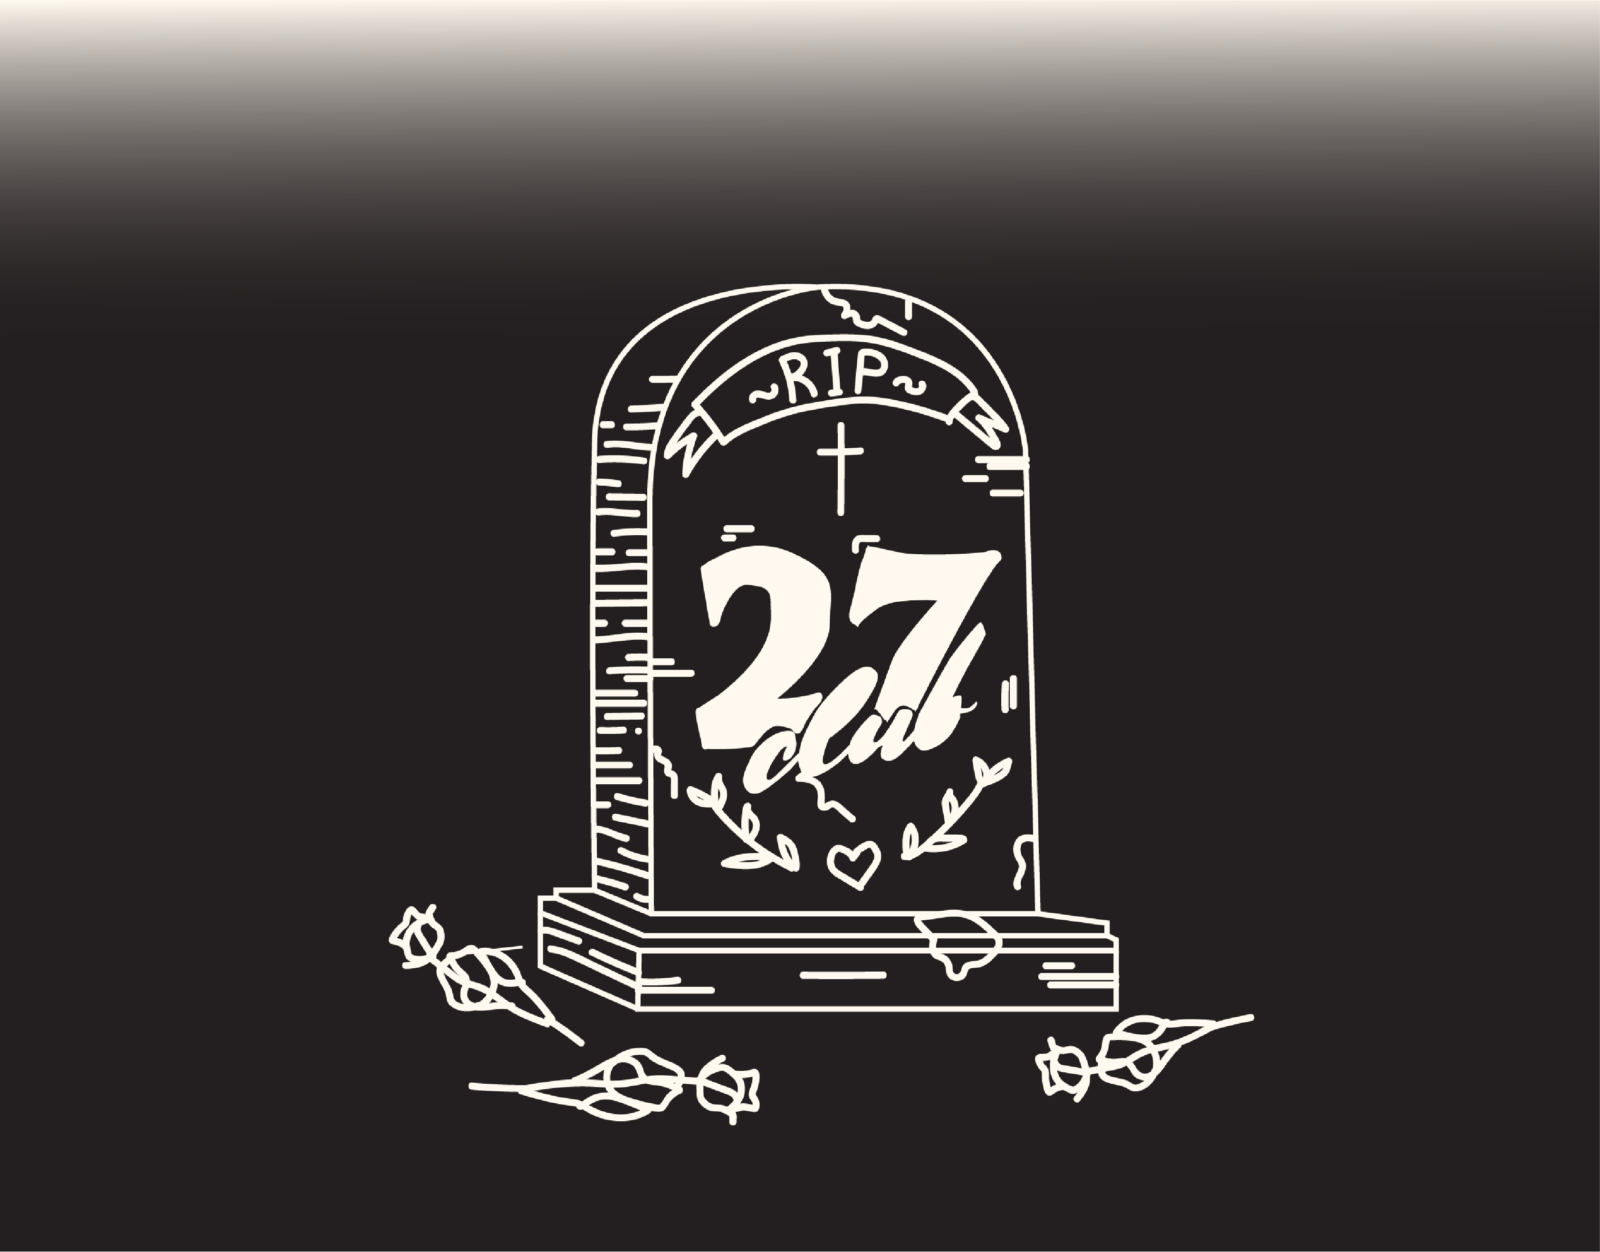 Gravestone illustration for '27 Club'.